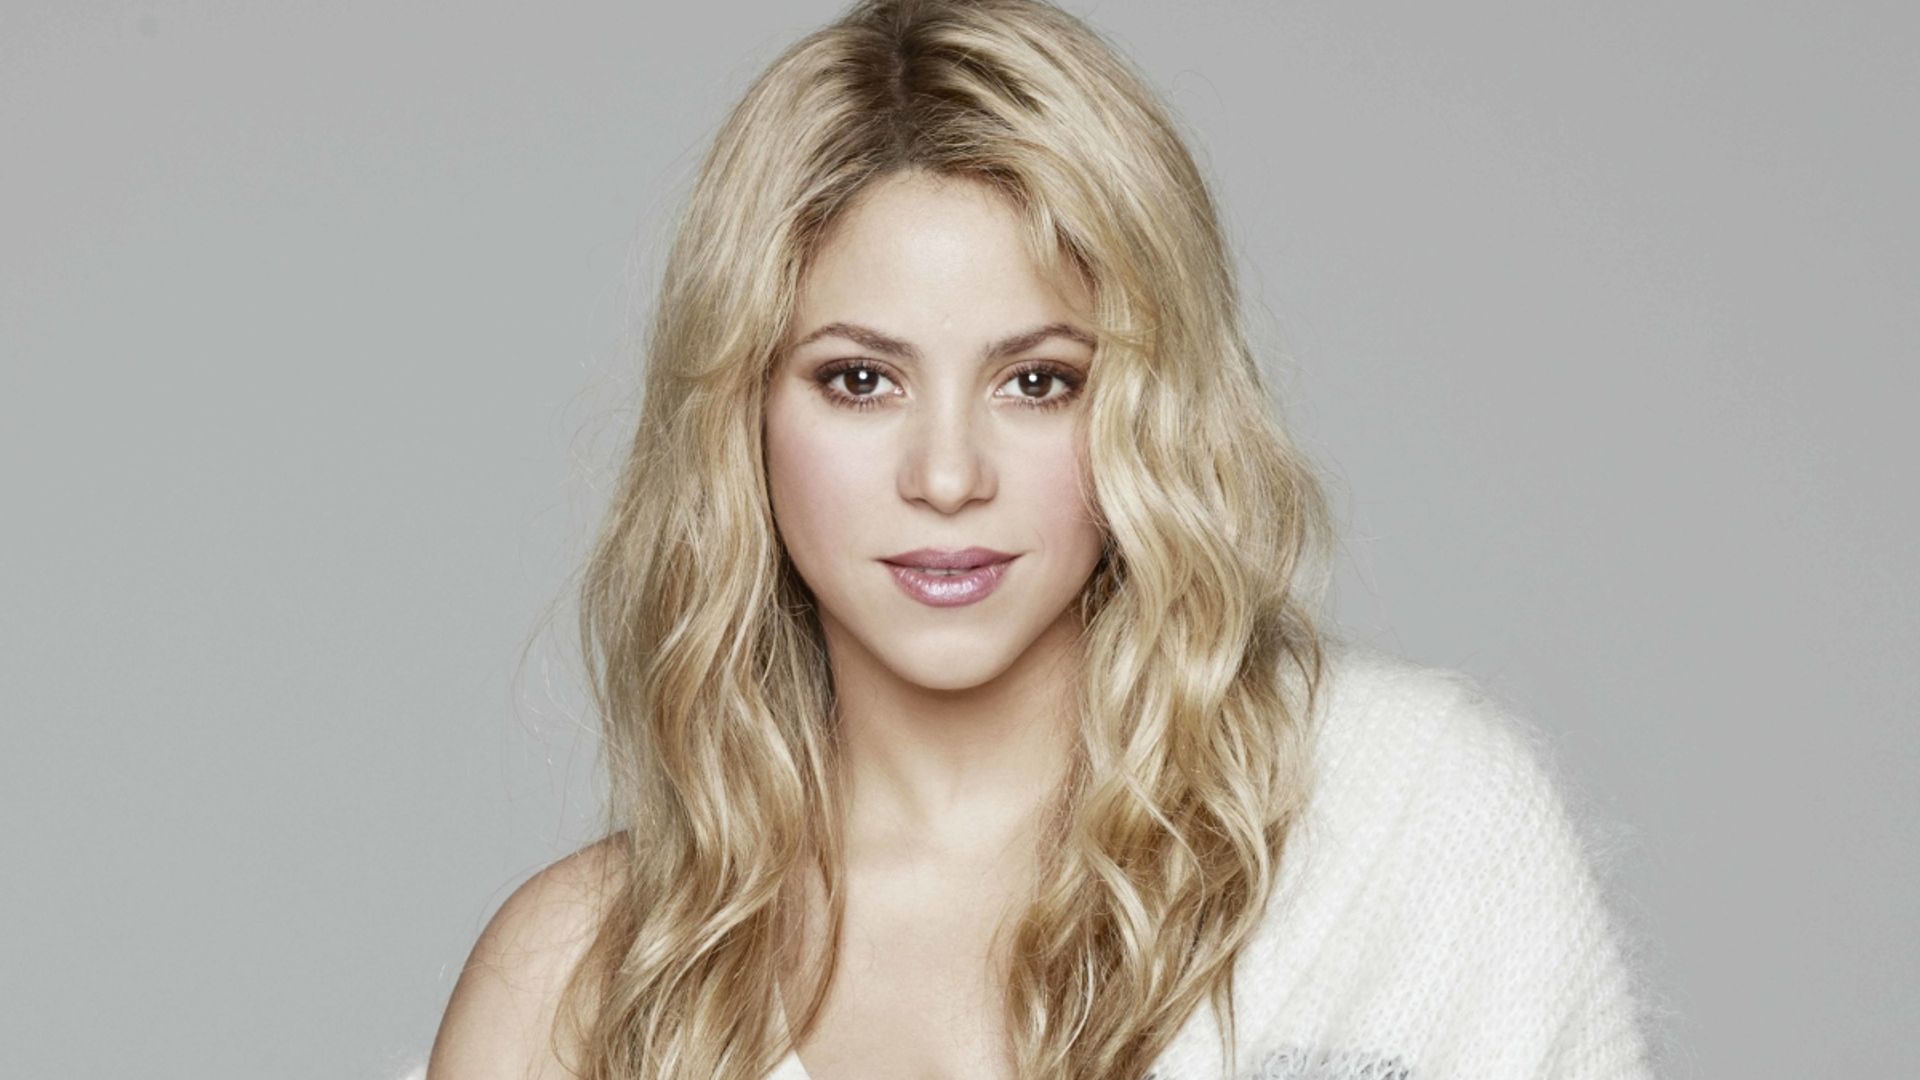 Shakira shares risqué throwback as she celebrates major career milestone